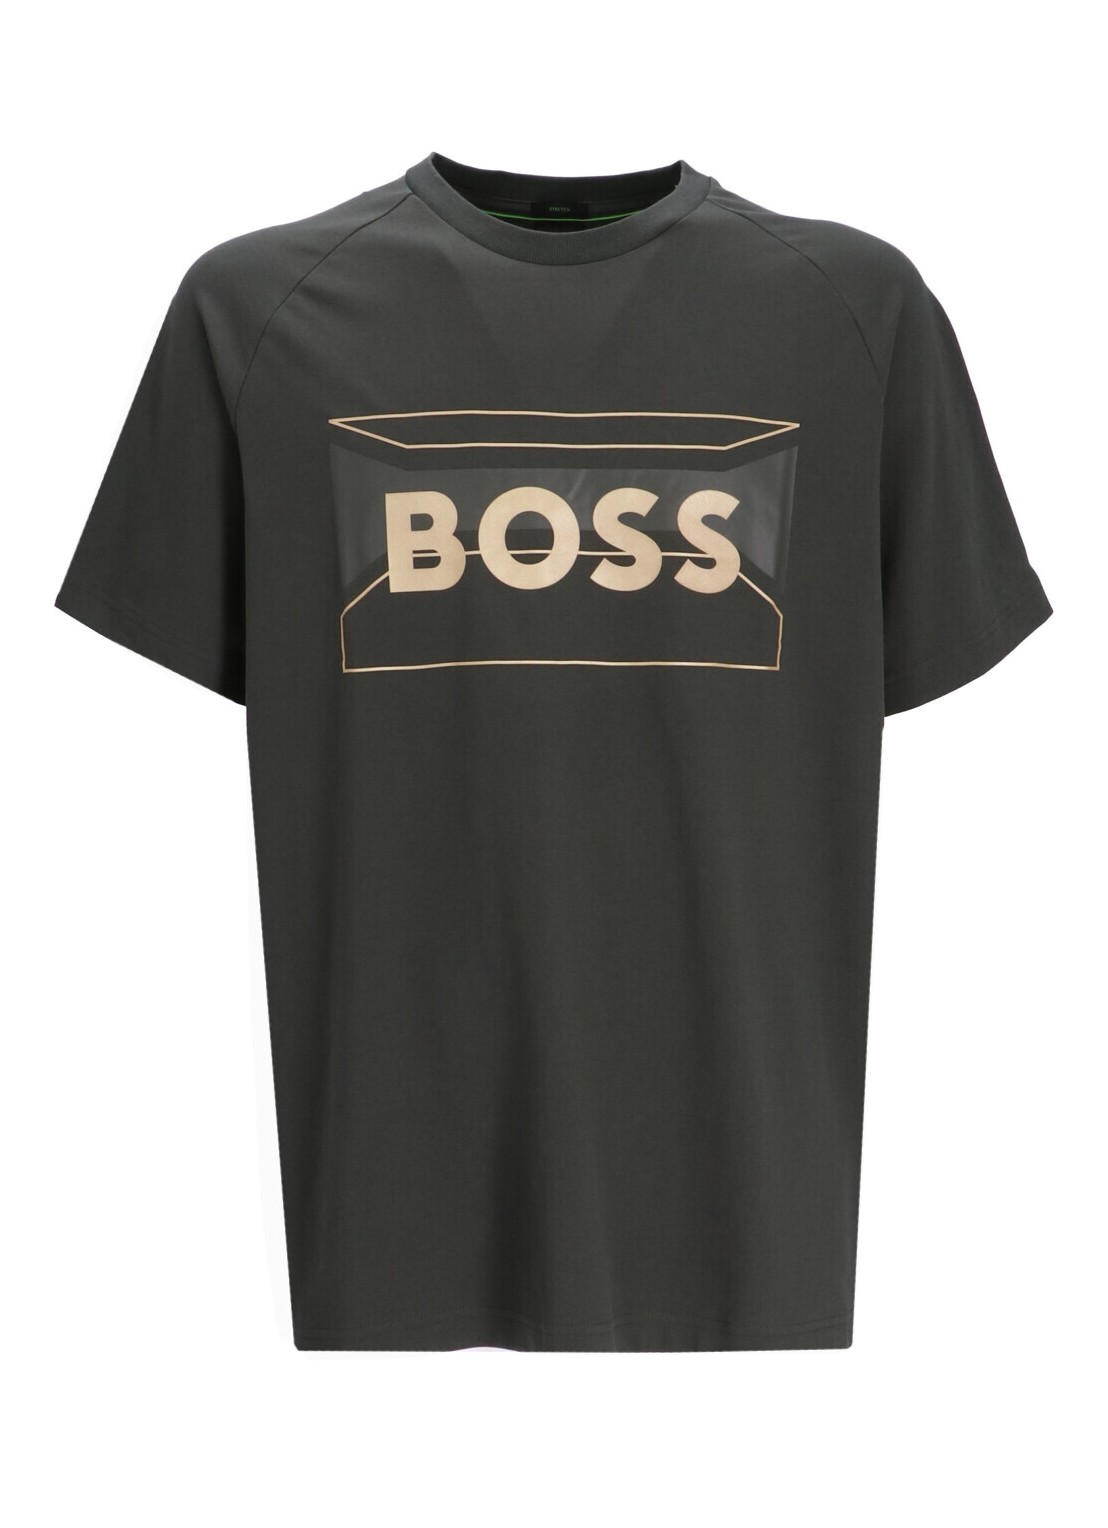 Camiseta boss t-shirt mantee 2 - 50514527 379 talla XXL
 